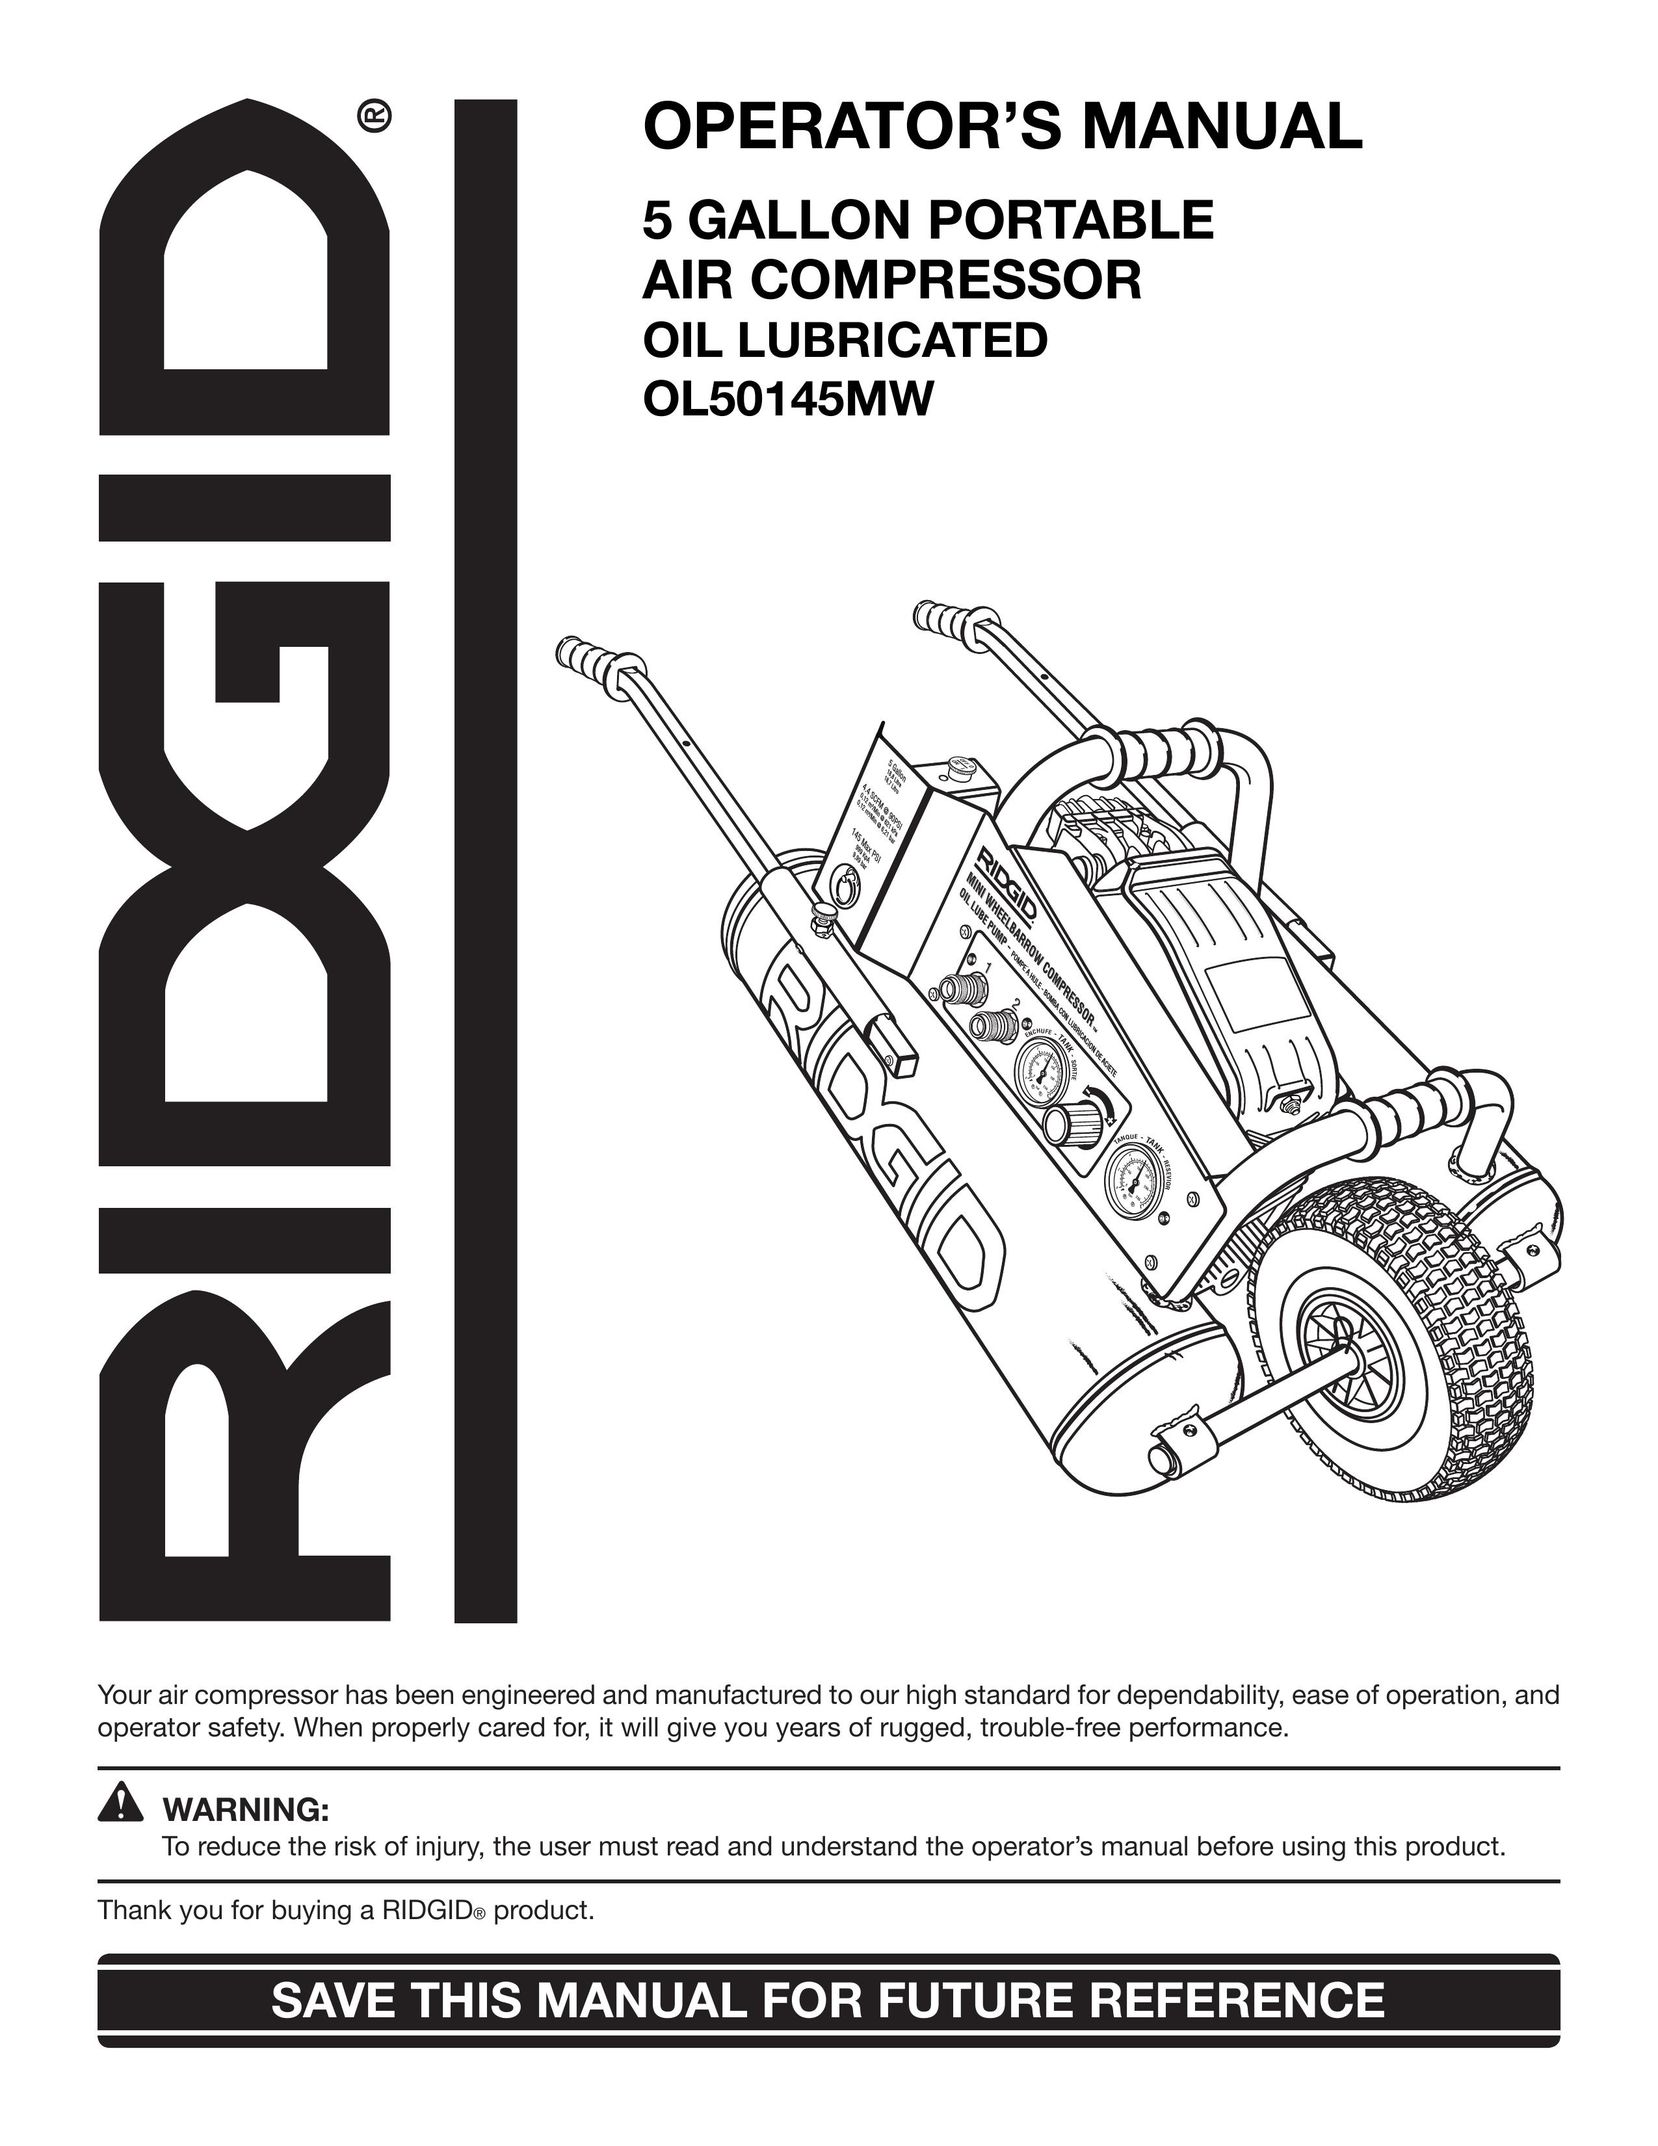 RIDGID OL50145MW Air Compressor User Manual